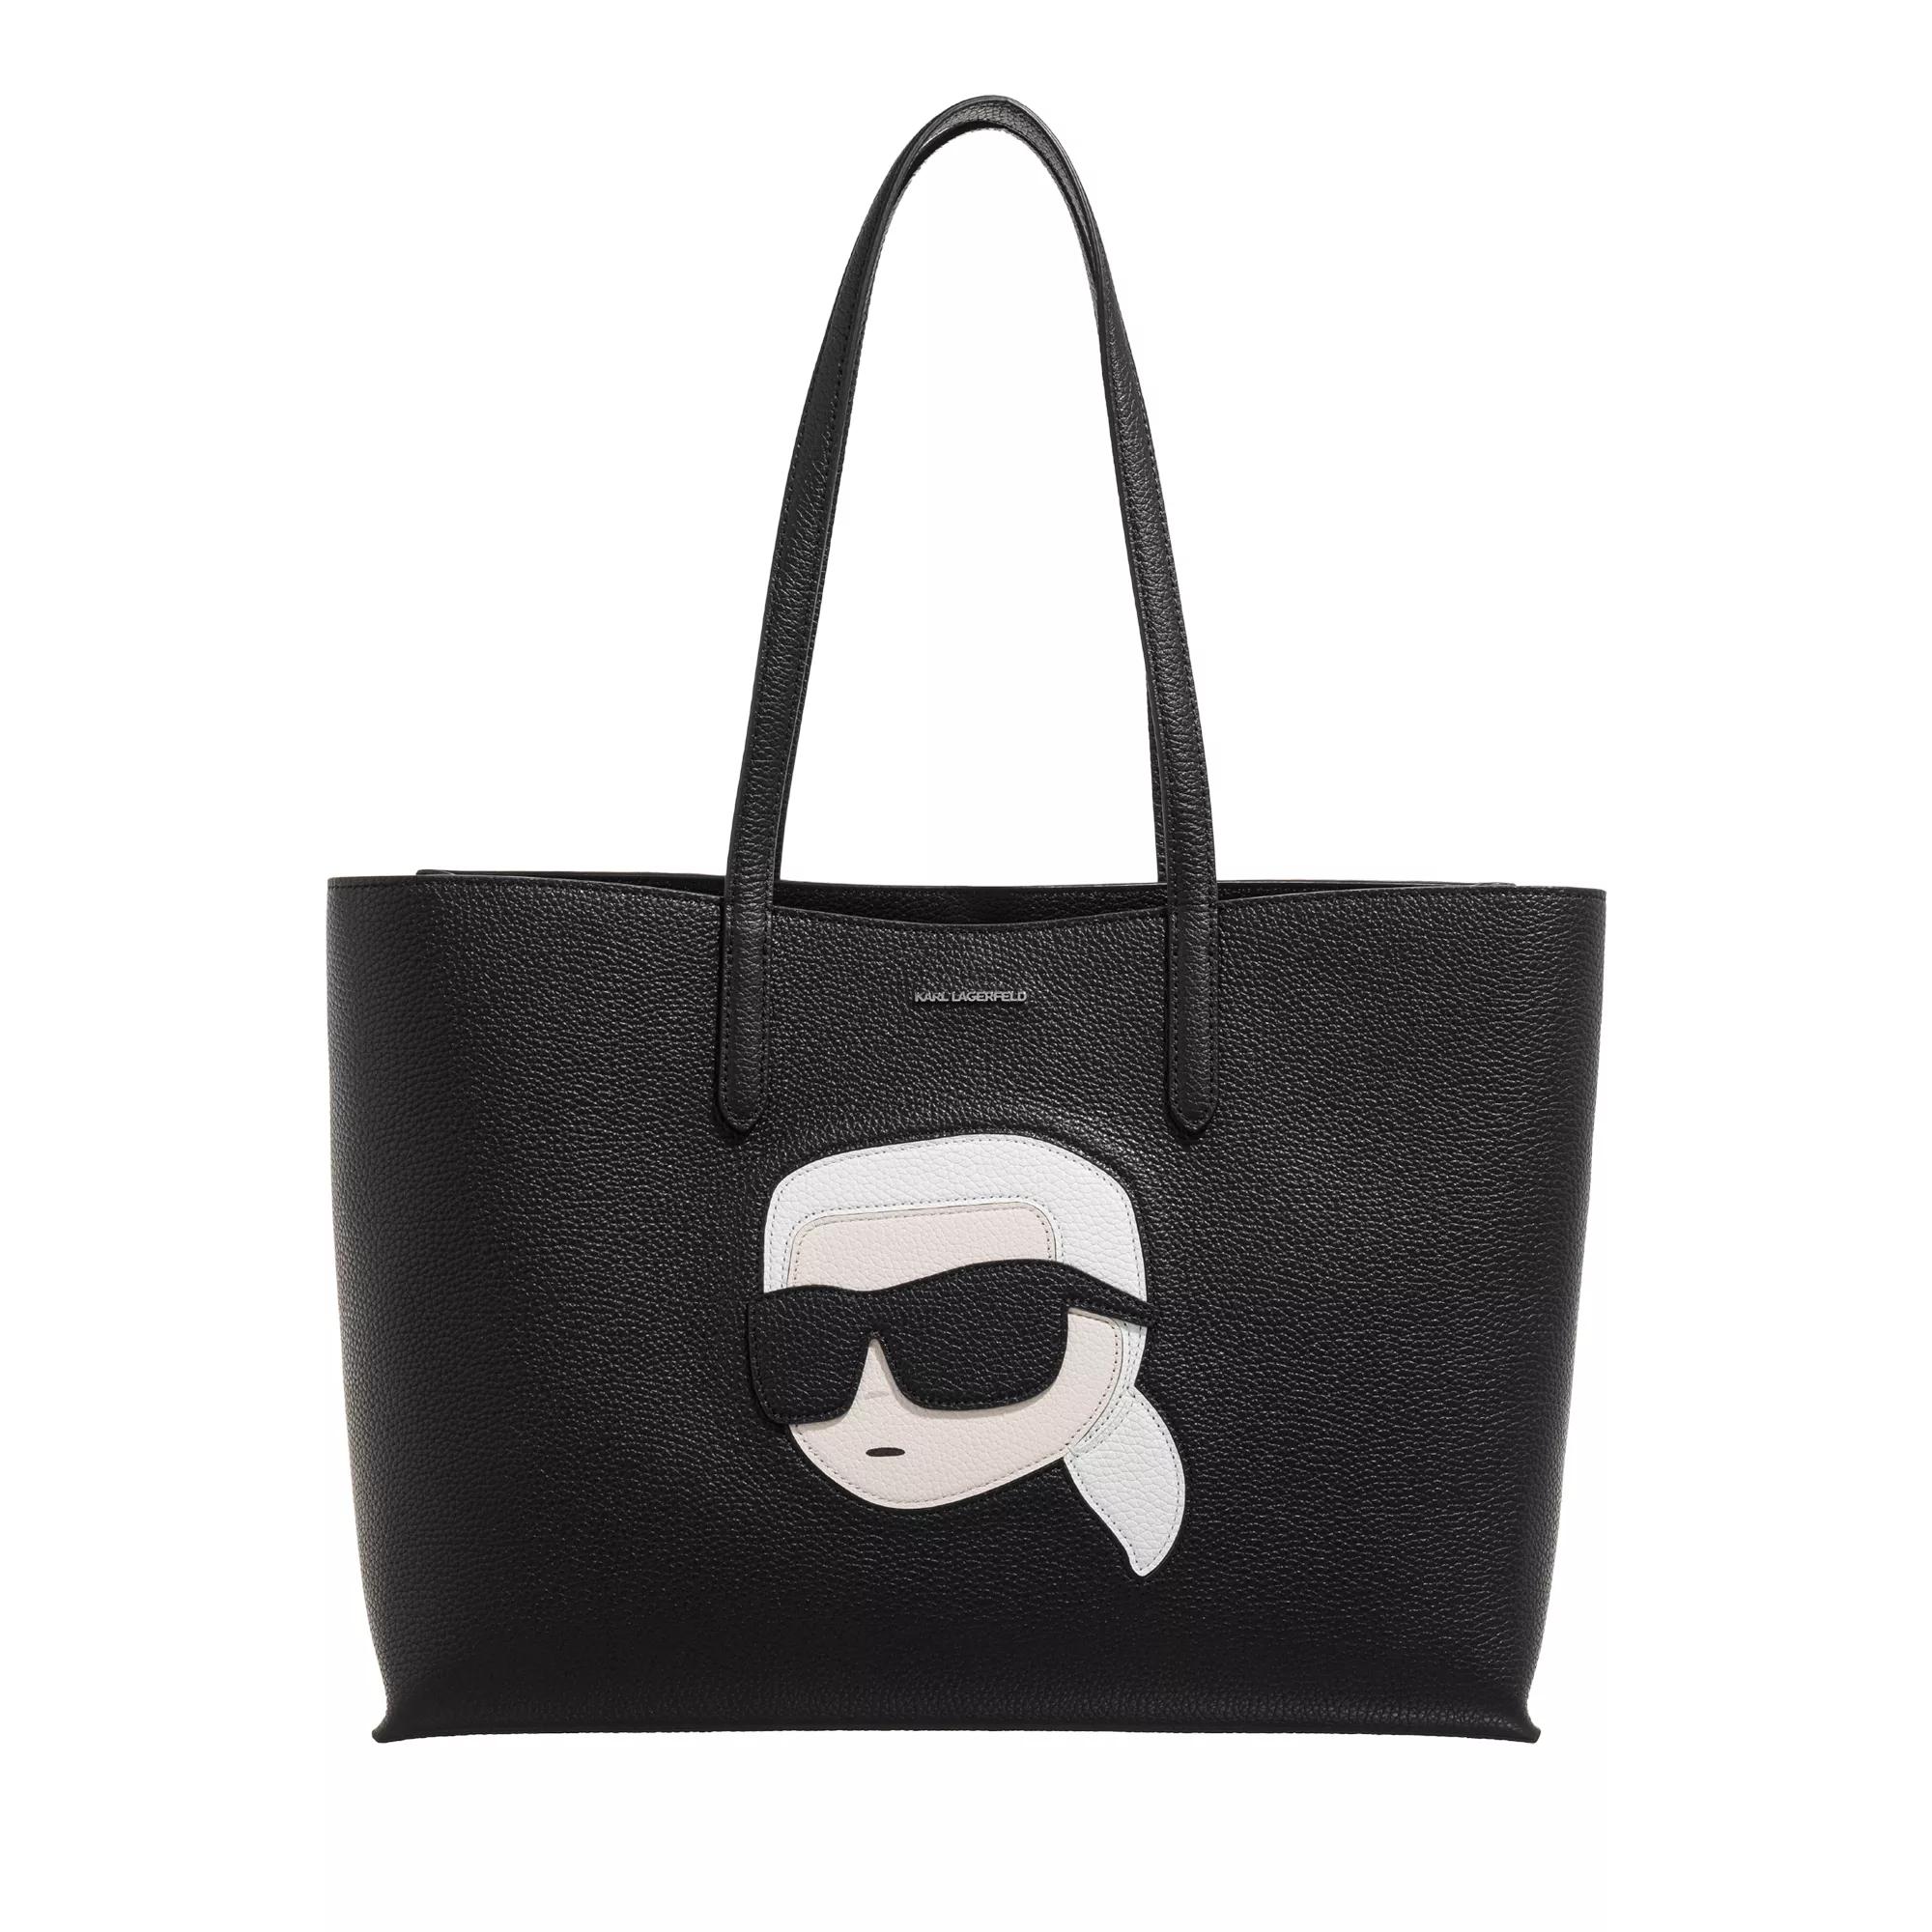 Karl Lagerfeld Ikonik 2.0 Lea Tote Grainy Black | Shopping Bag ...